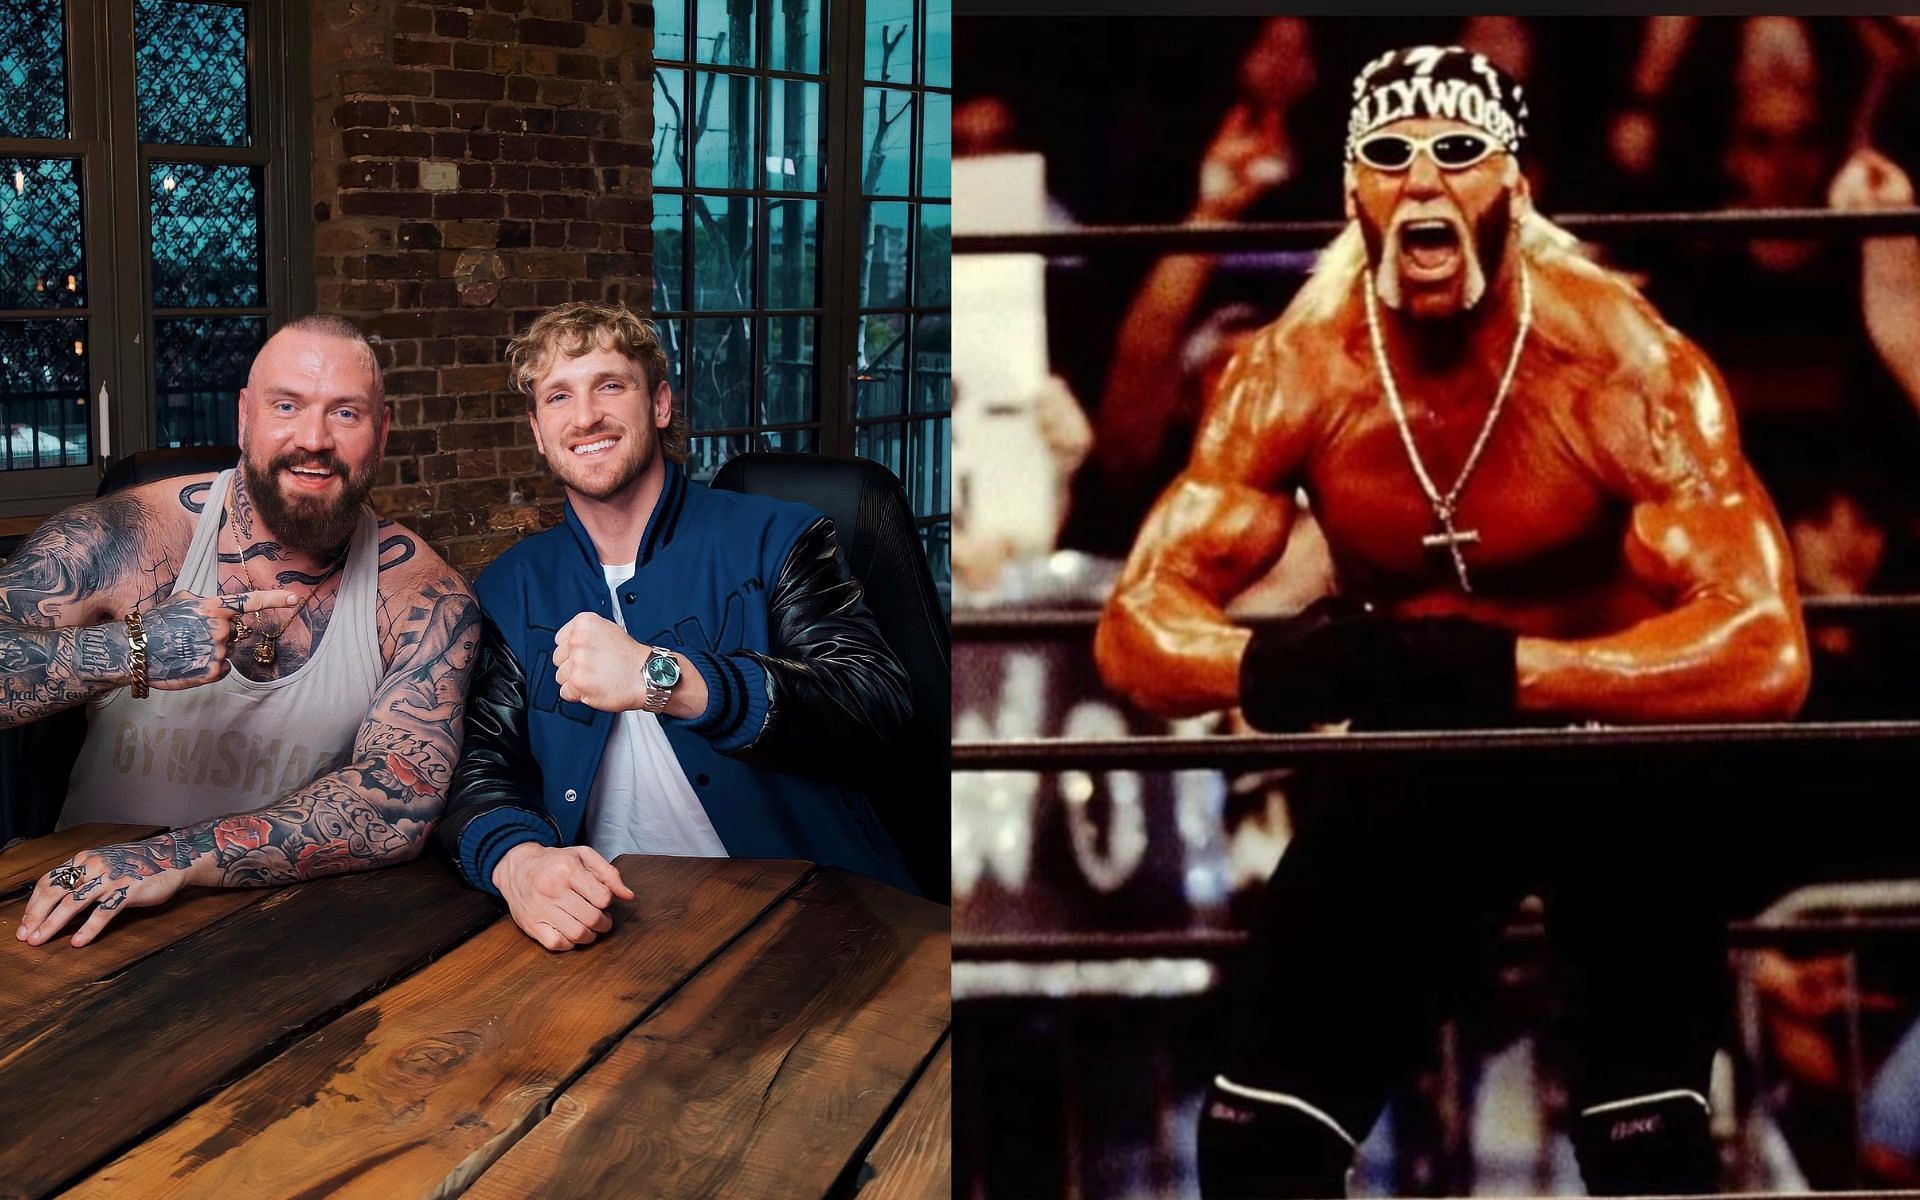 From left to right: True Geordie, Logan Paul, Hulk Hogan [Image Courtesy: @truegeordieoffcial and @hulkhogan on Instagram]